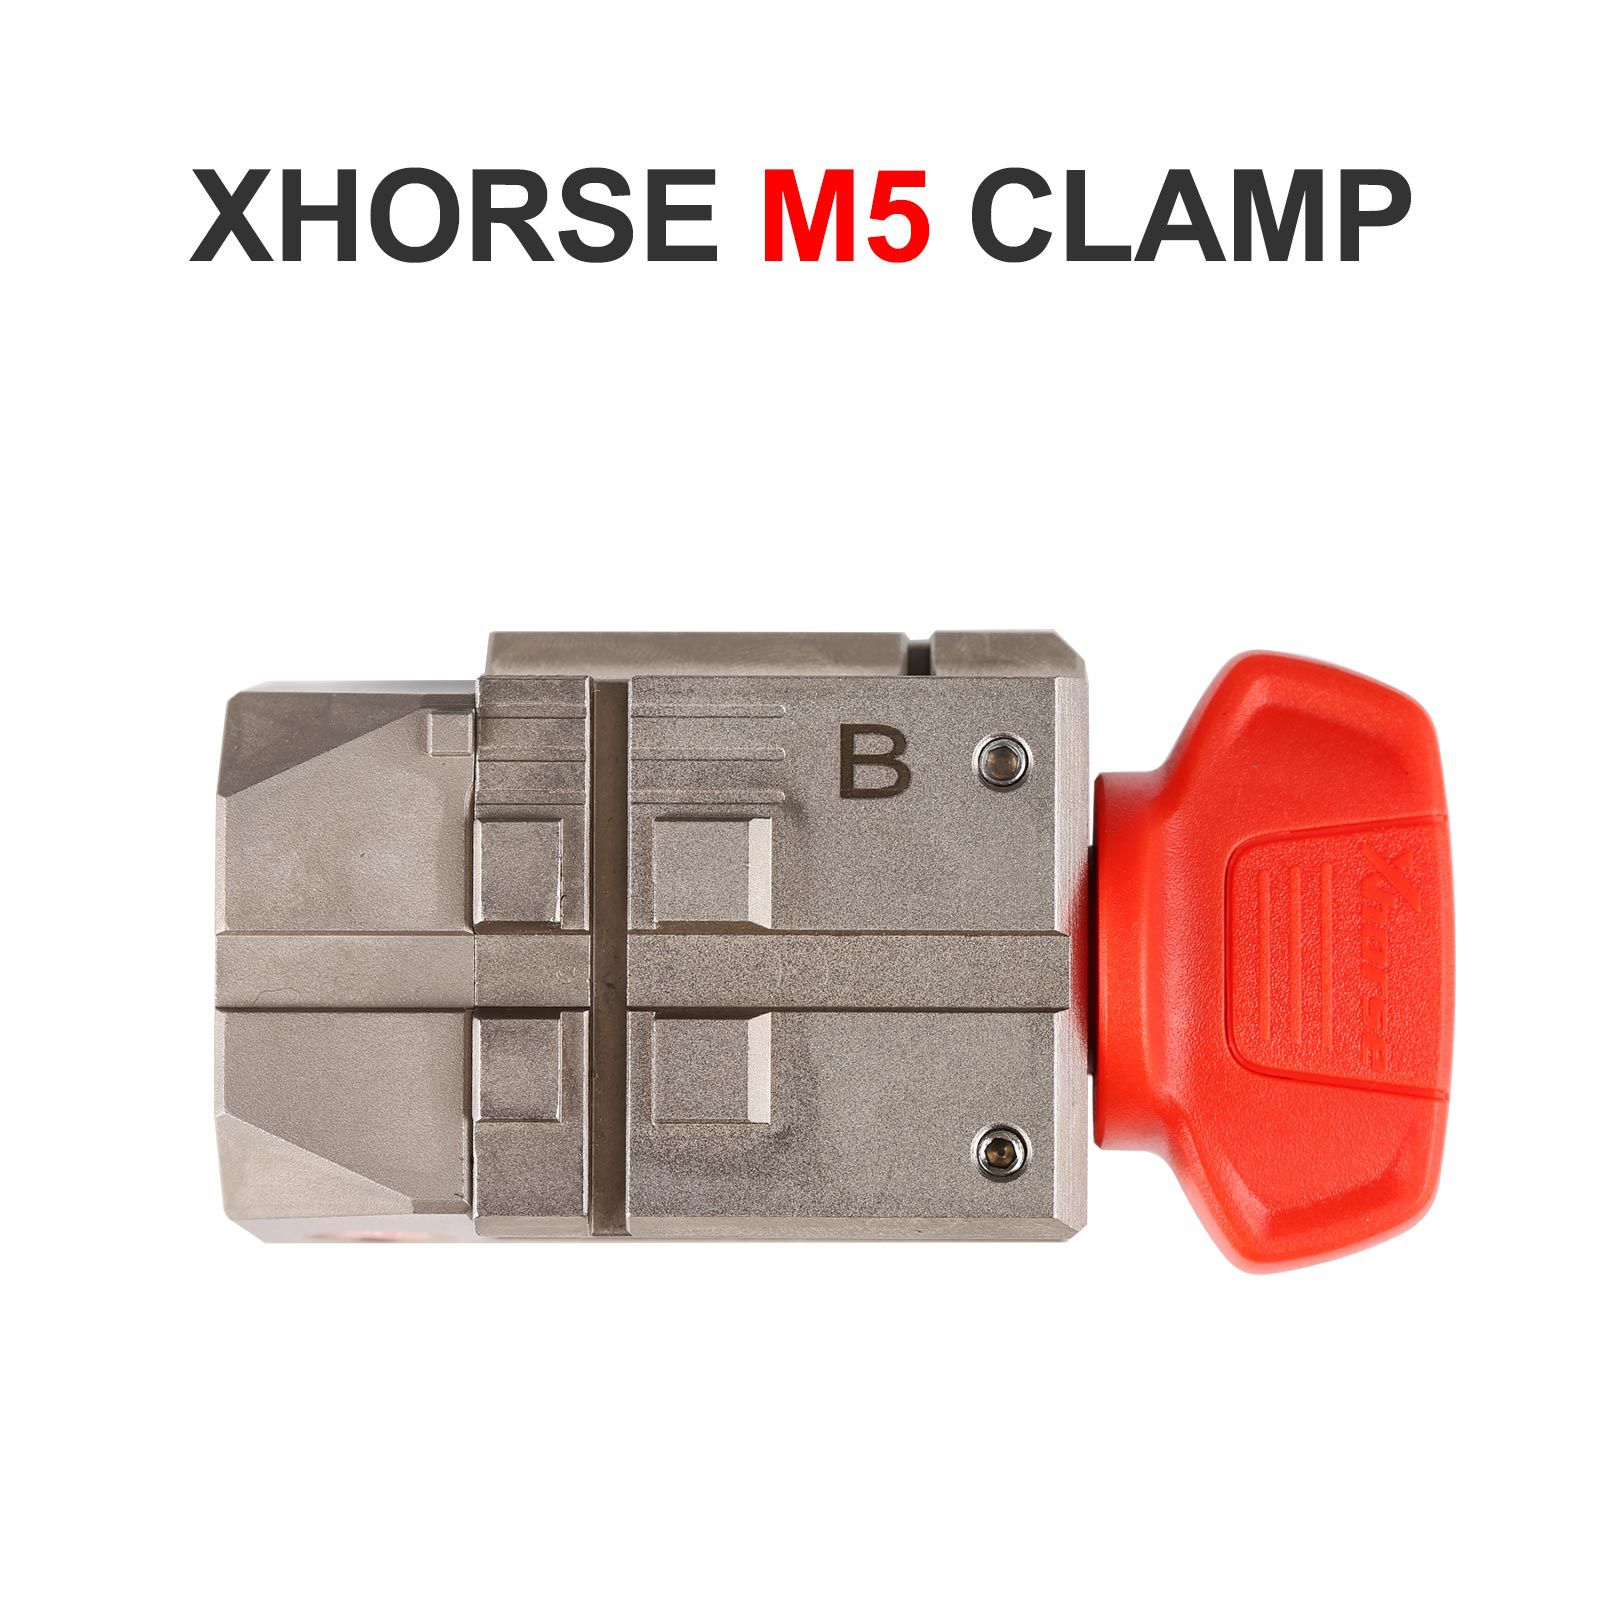 Xhorse M5 Clamp Works With Dolphin XP-005/ XP-005L/ Condor XC-MINI/ XC-MINI Plus / XC-MINI Plus II Key Cutting Machine